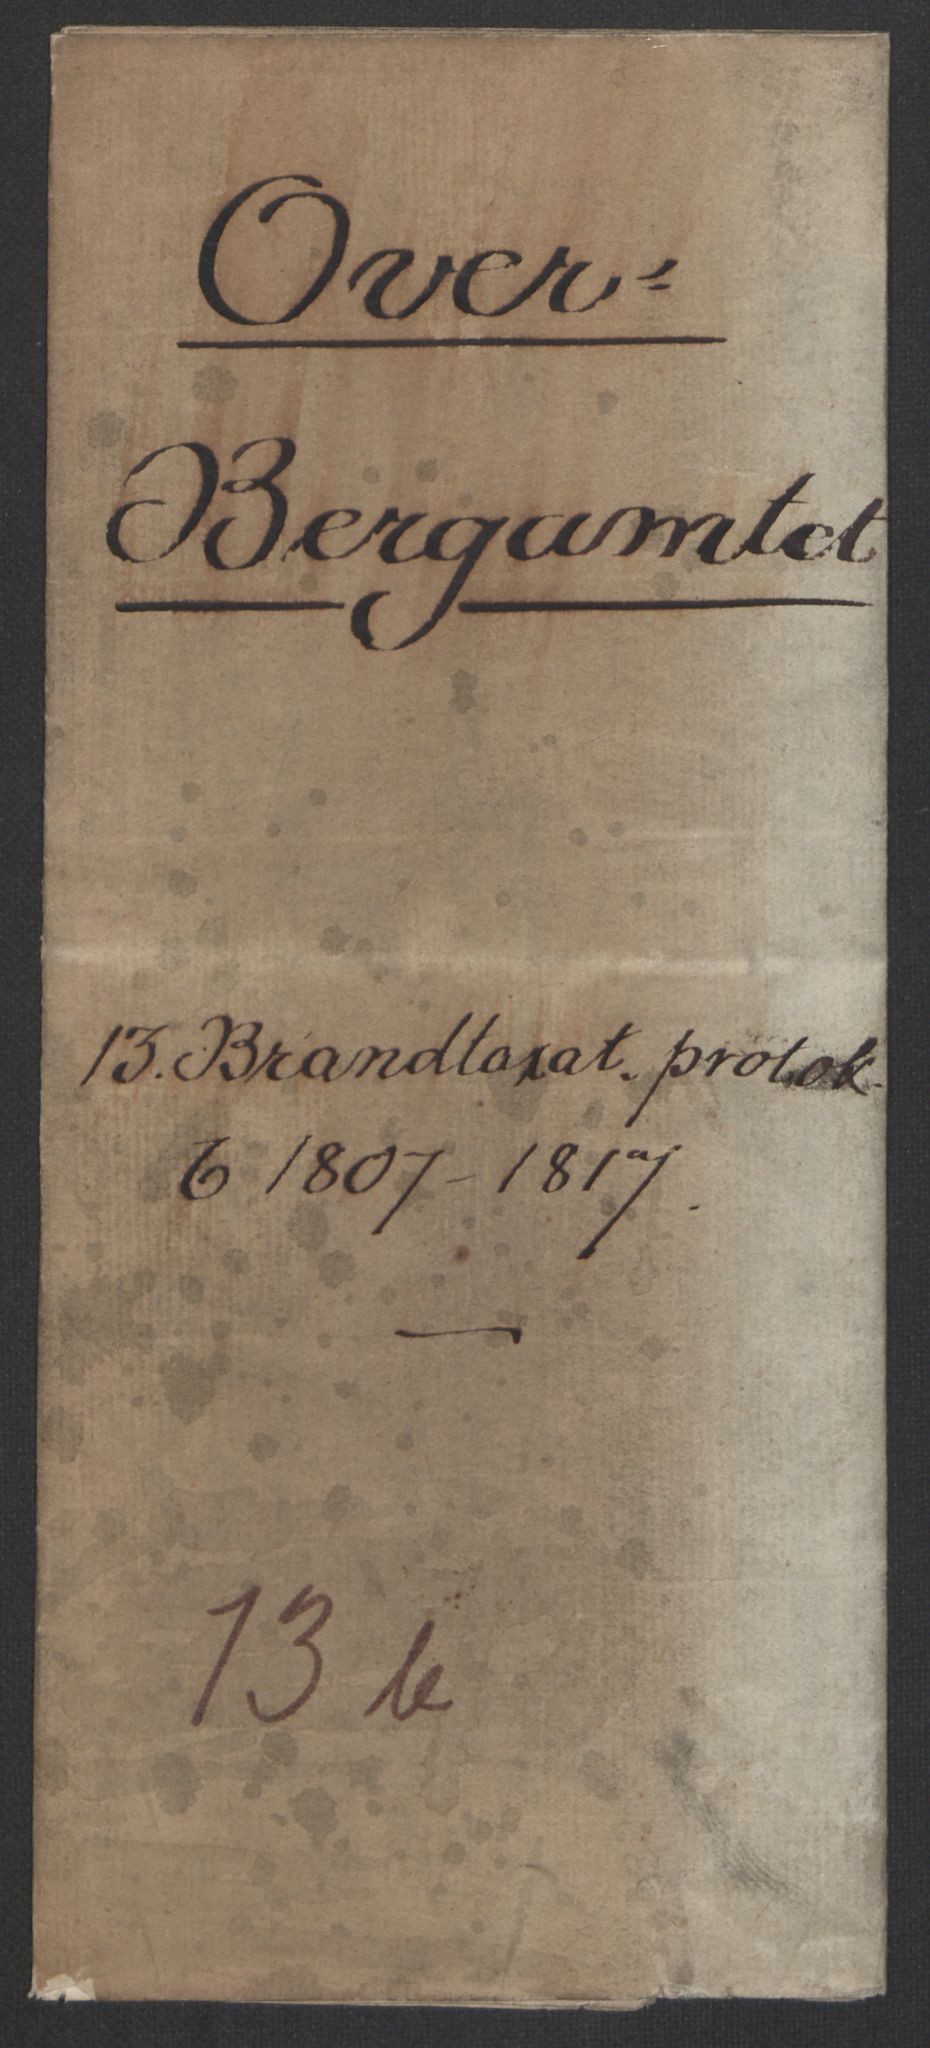 Sønnafjelske bergamt , SAKO/EA-5262/K/L0003: Branntakstprotokoll, 1807